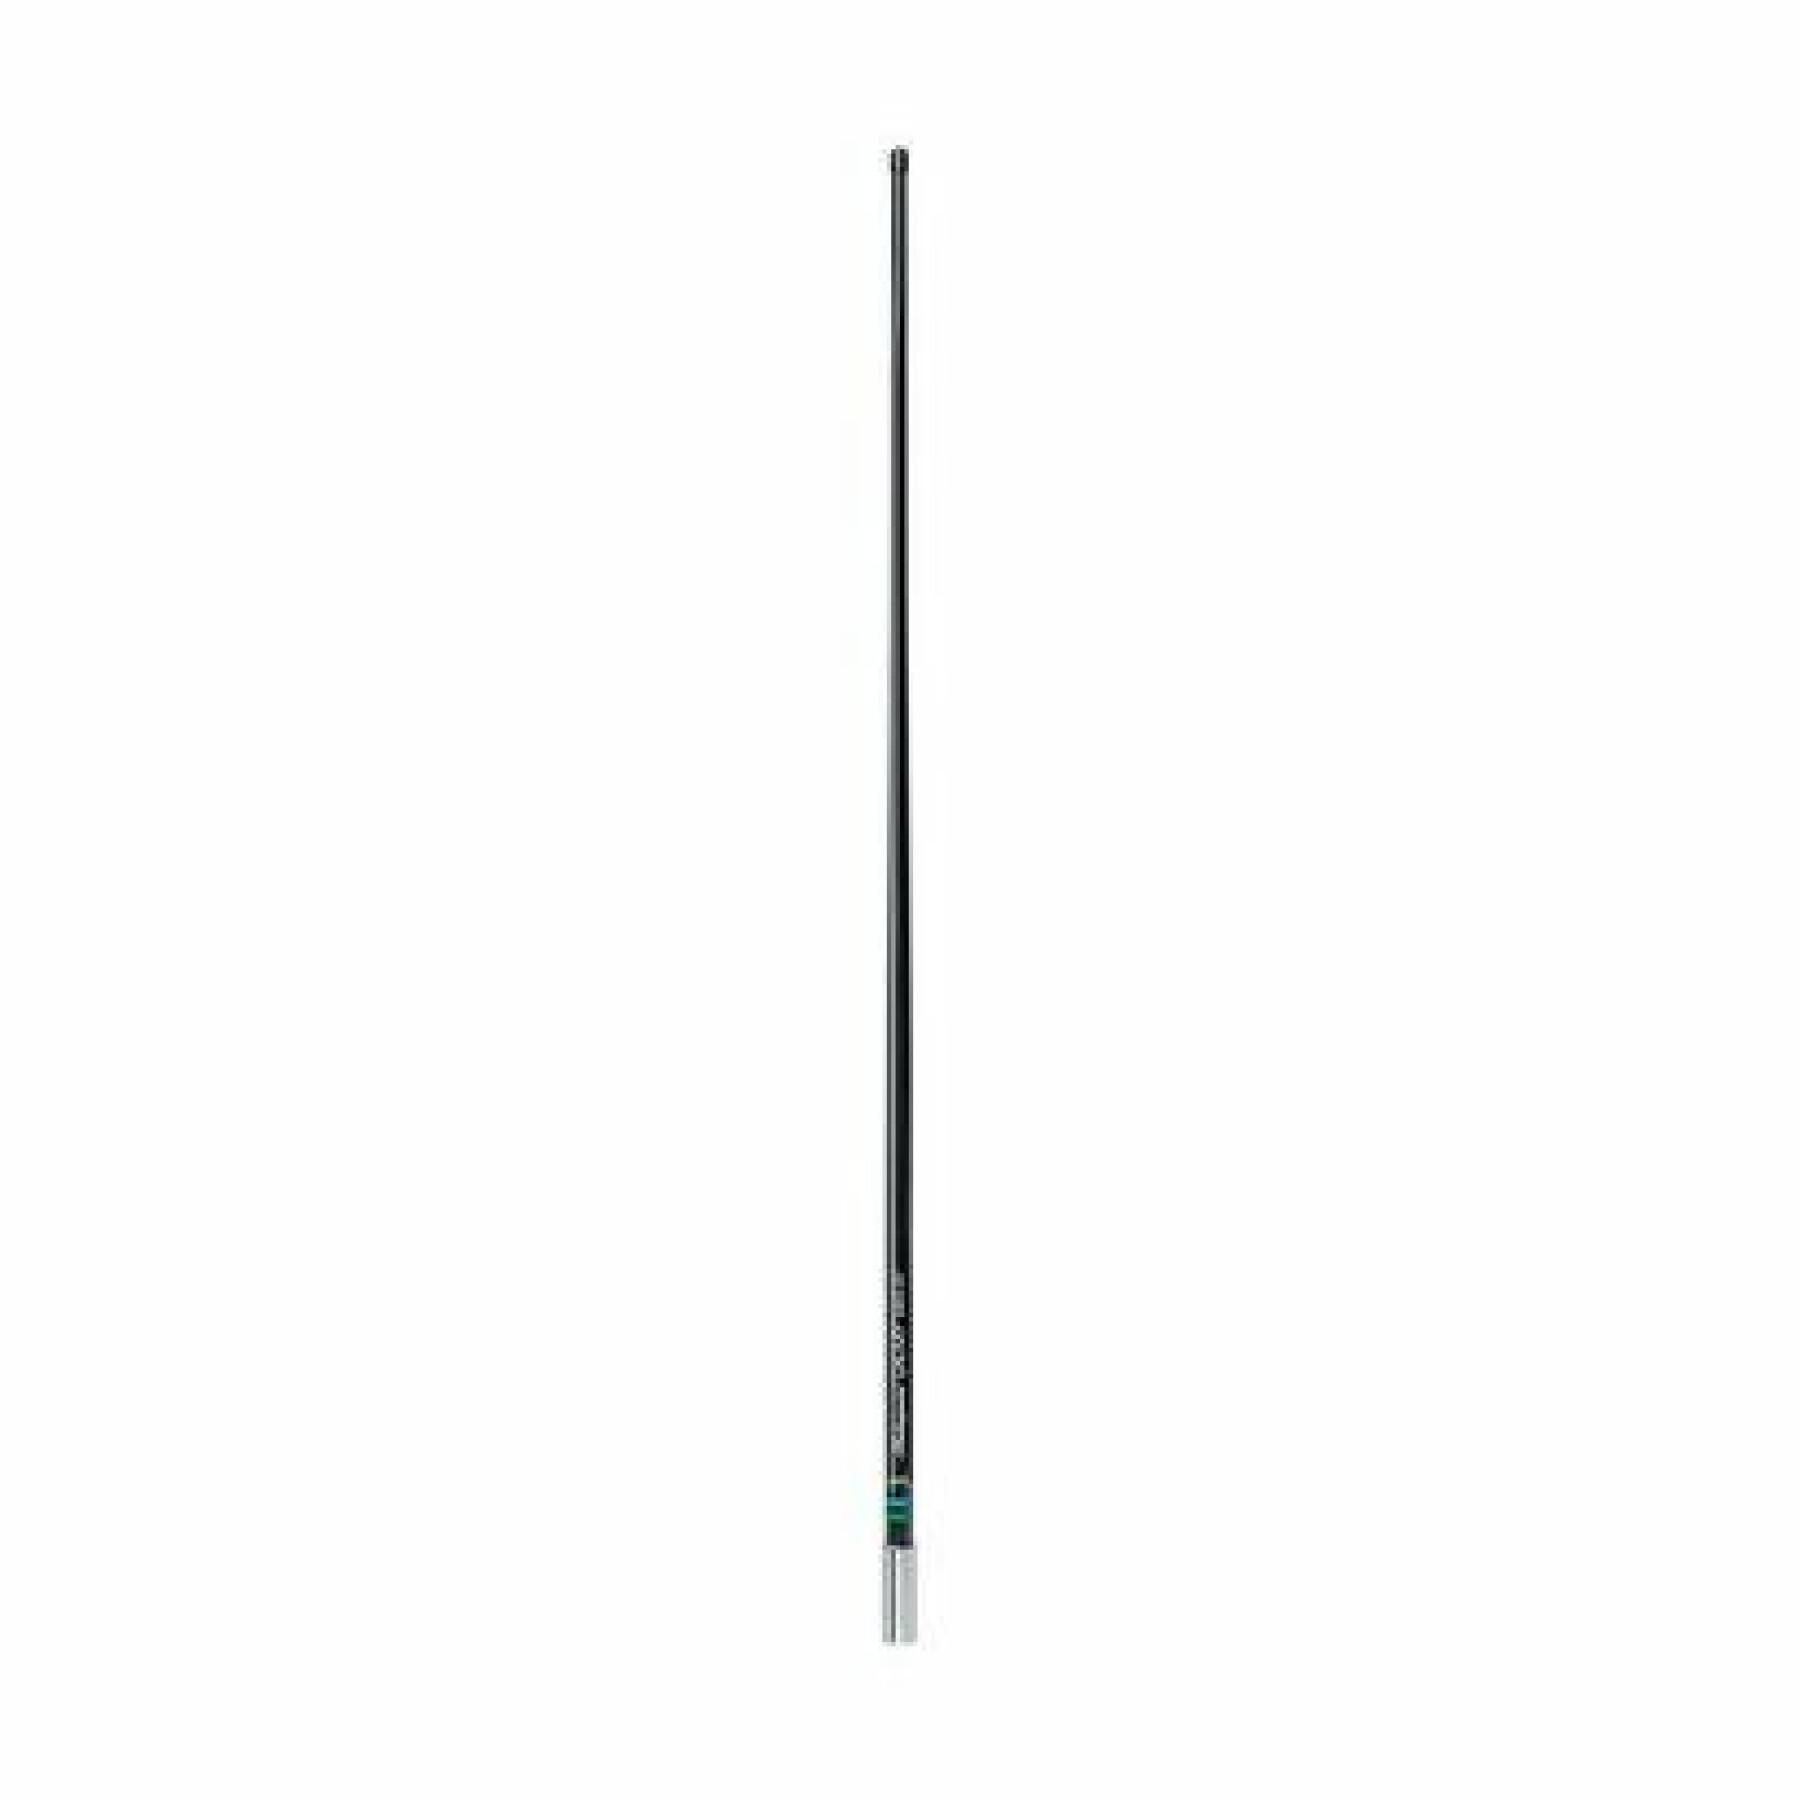 Antena con virola de acero inoxidable Shakespeare VHF Galaxy 3dB – 1,2m - RG 8X+PL259